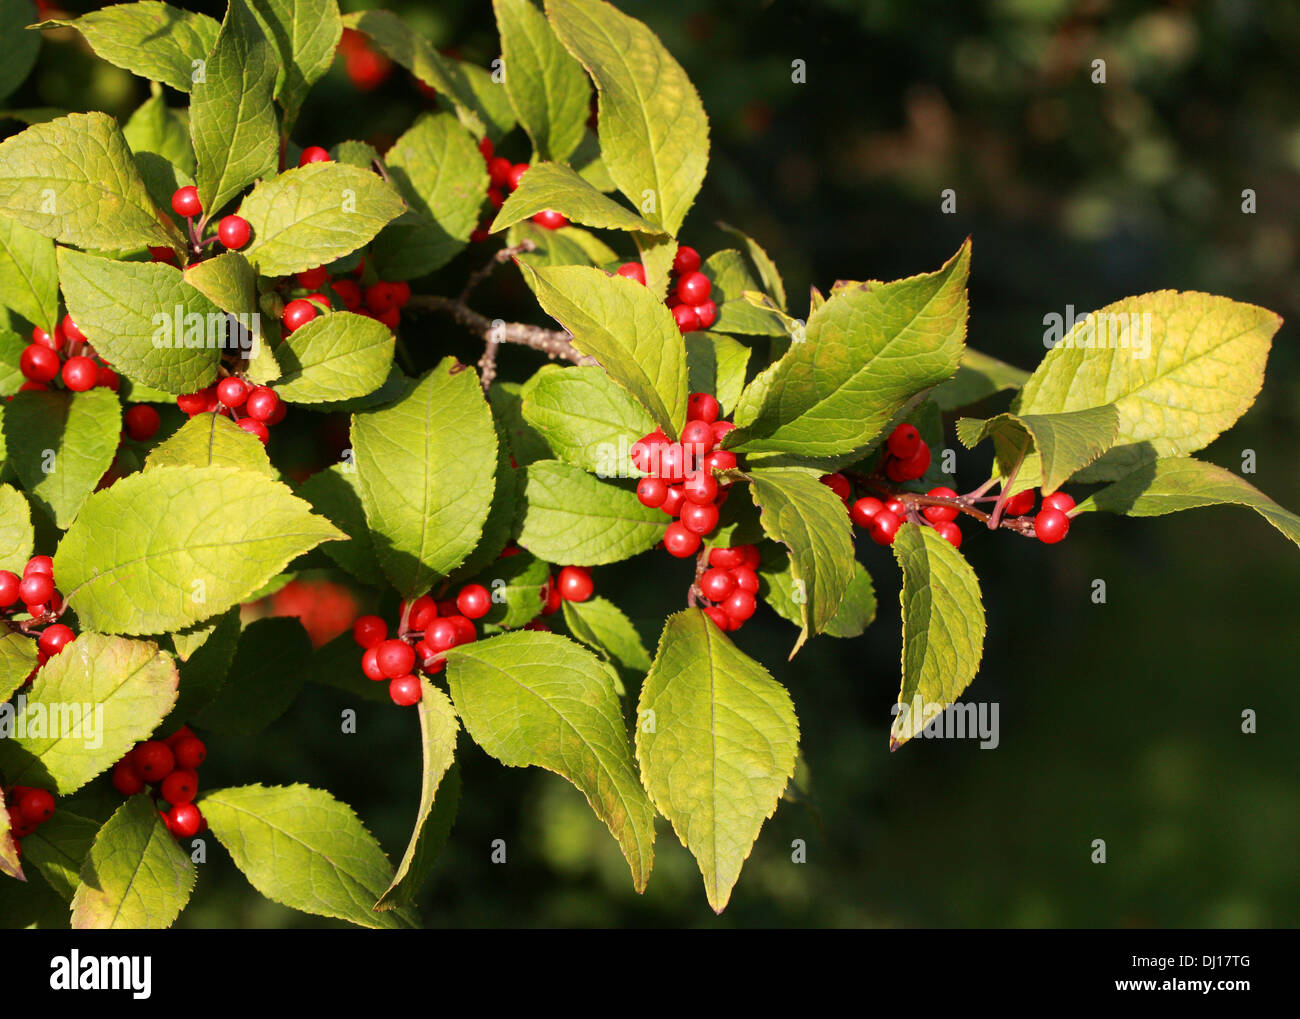 Winterberry Holly, Black Alder, Fever Berry, Ilex verticillata 'Sparkleberry', Aquifoliaceae. Northeastern U.S. and Canada. Stock Photo